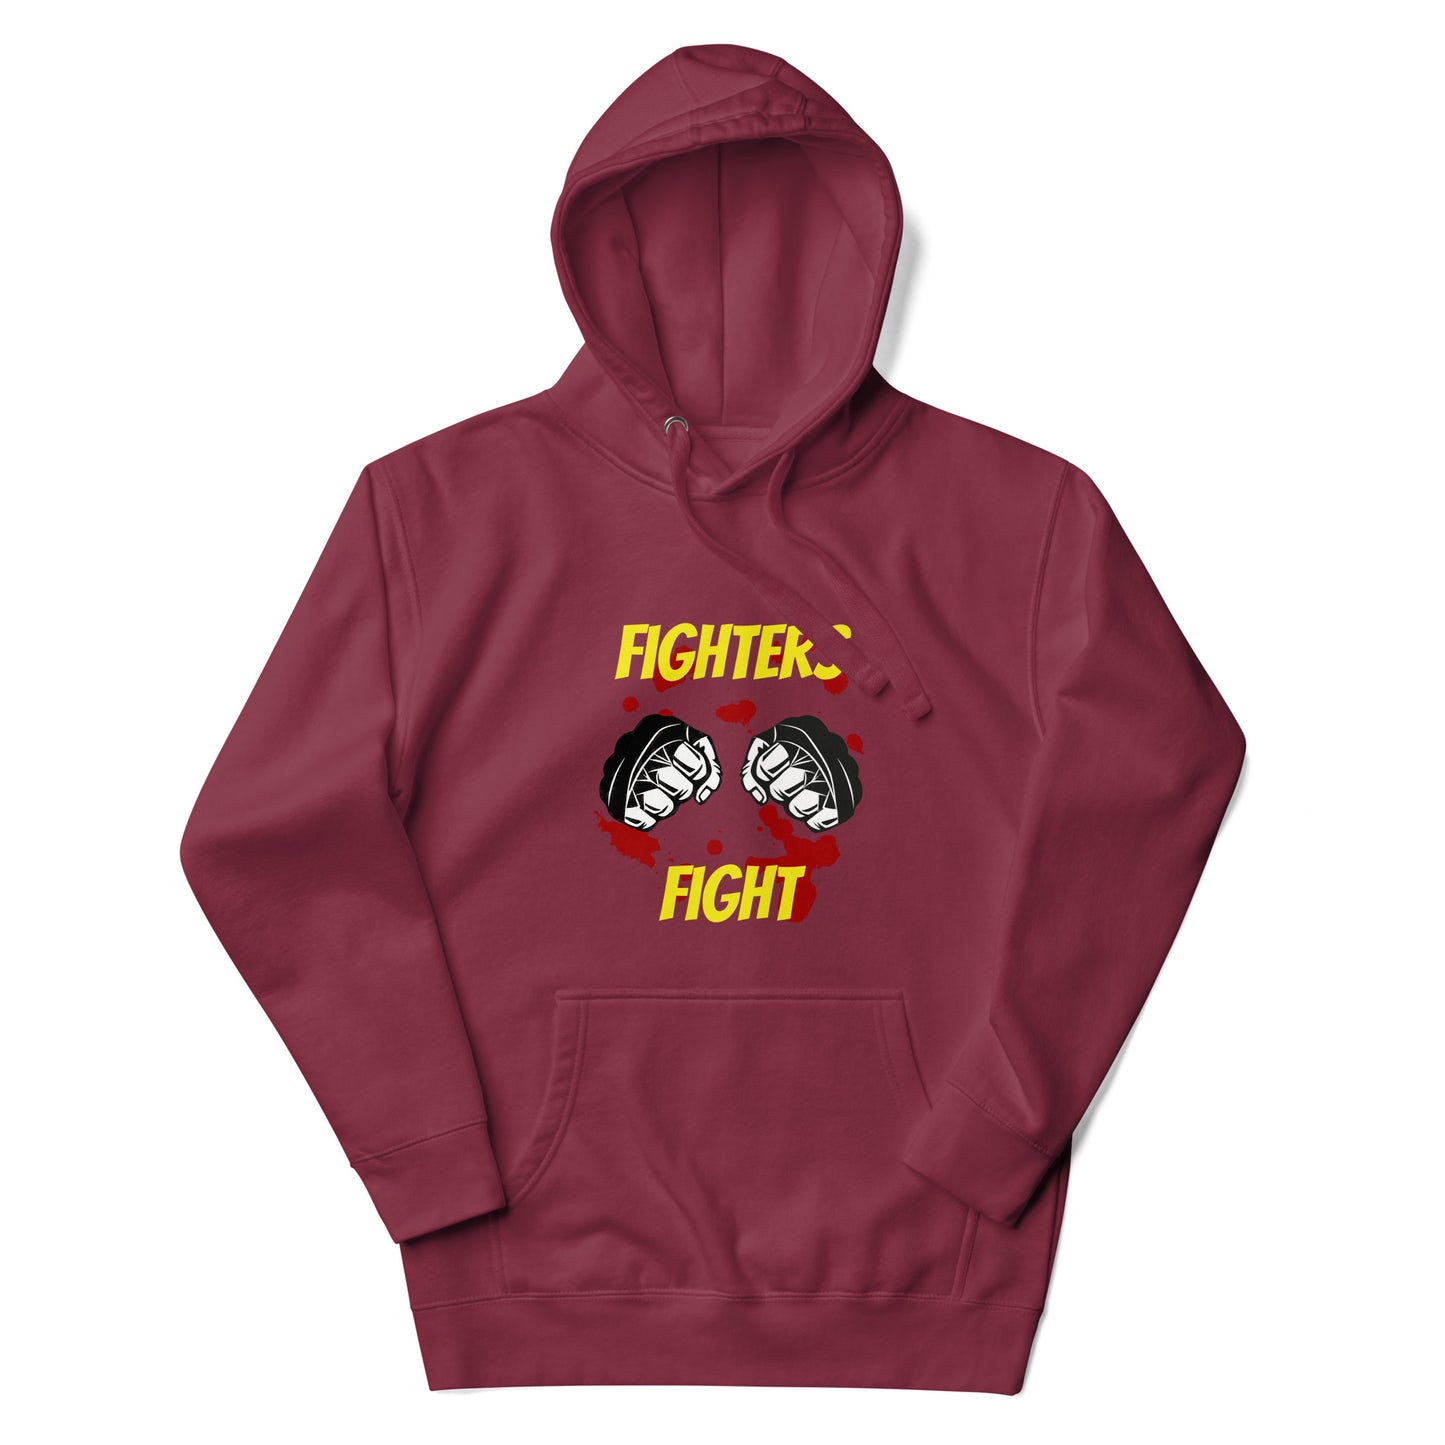 Fighters Fight Unisex Hoodie